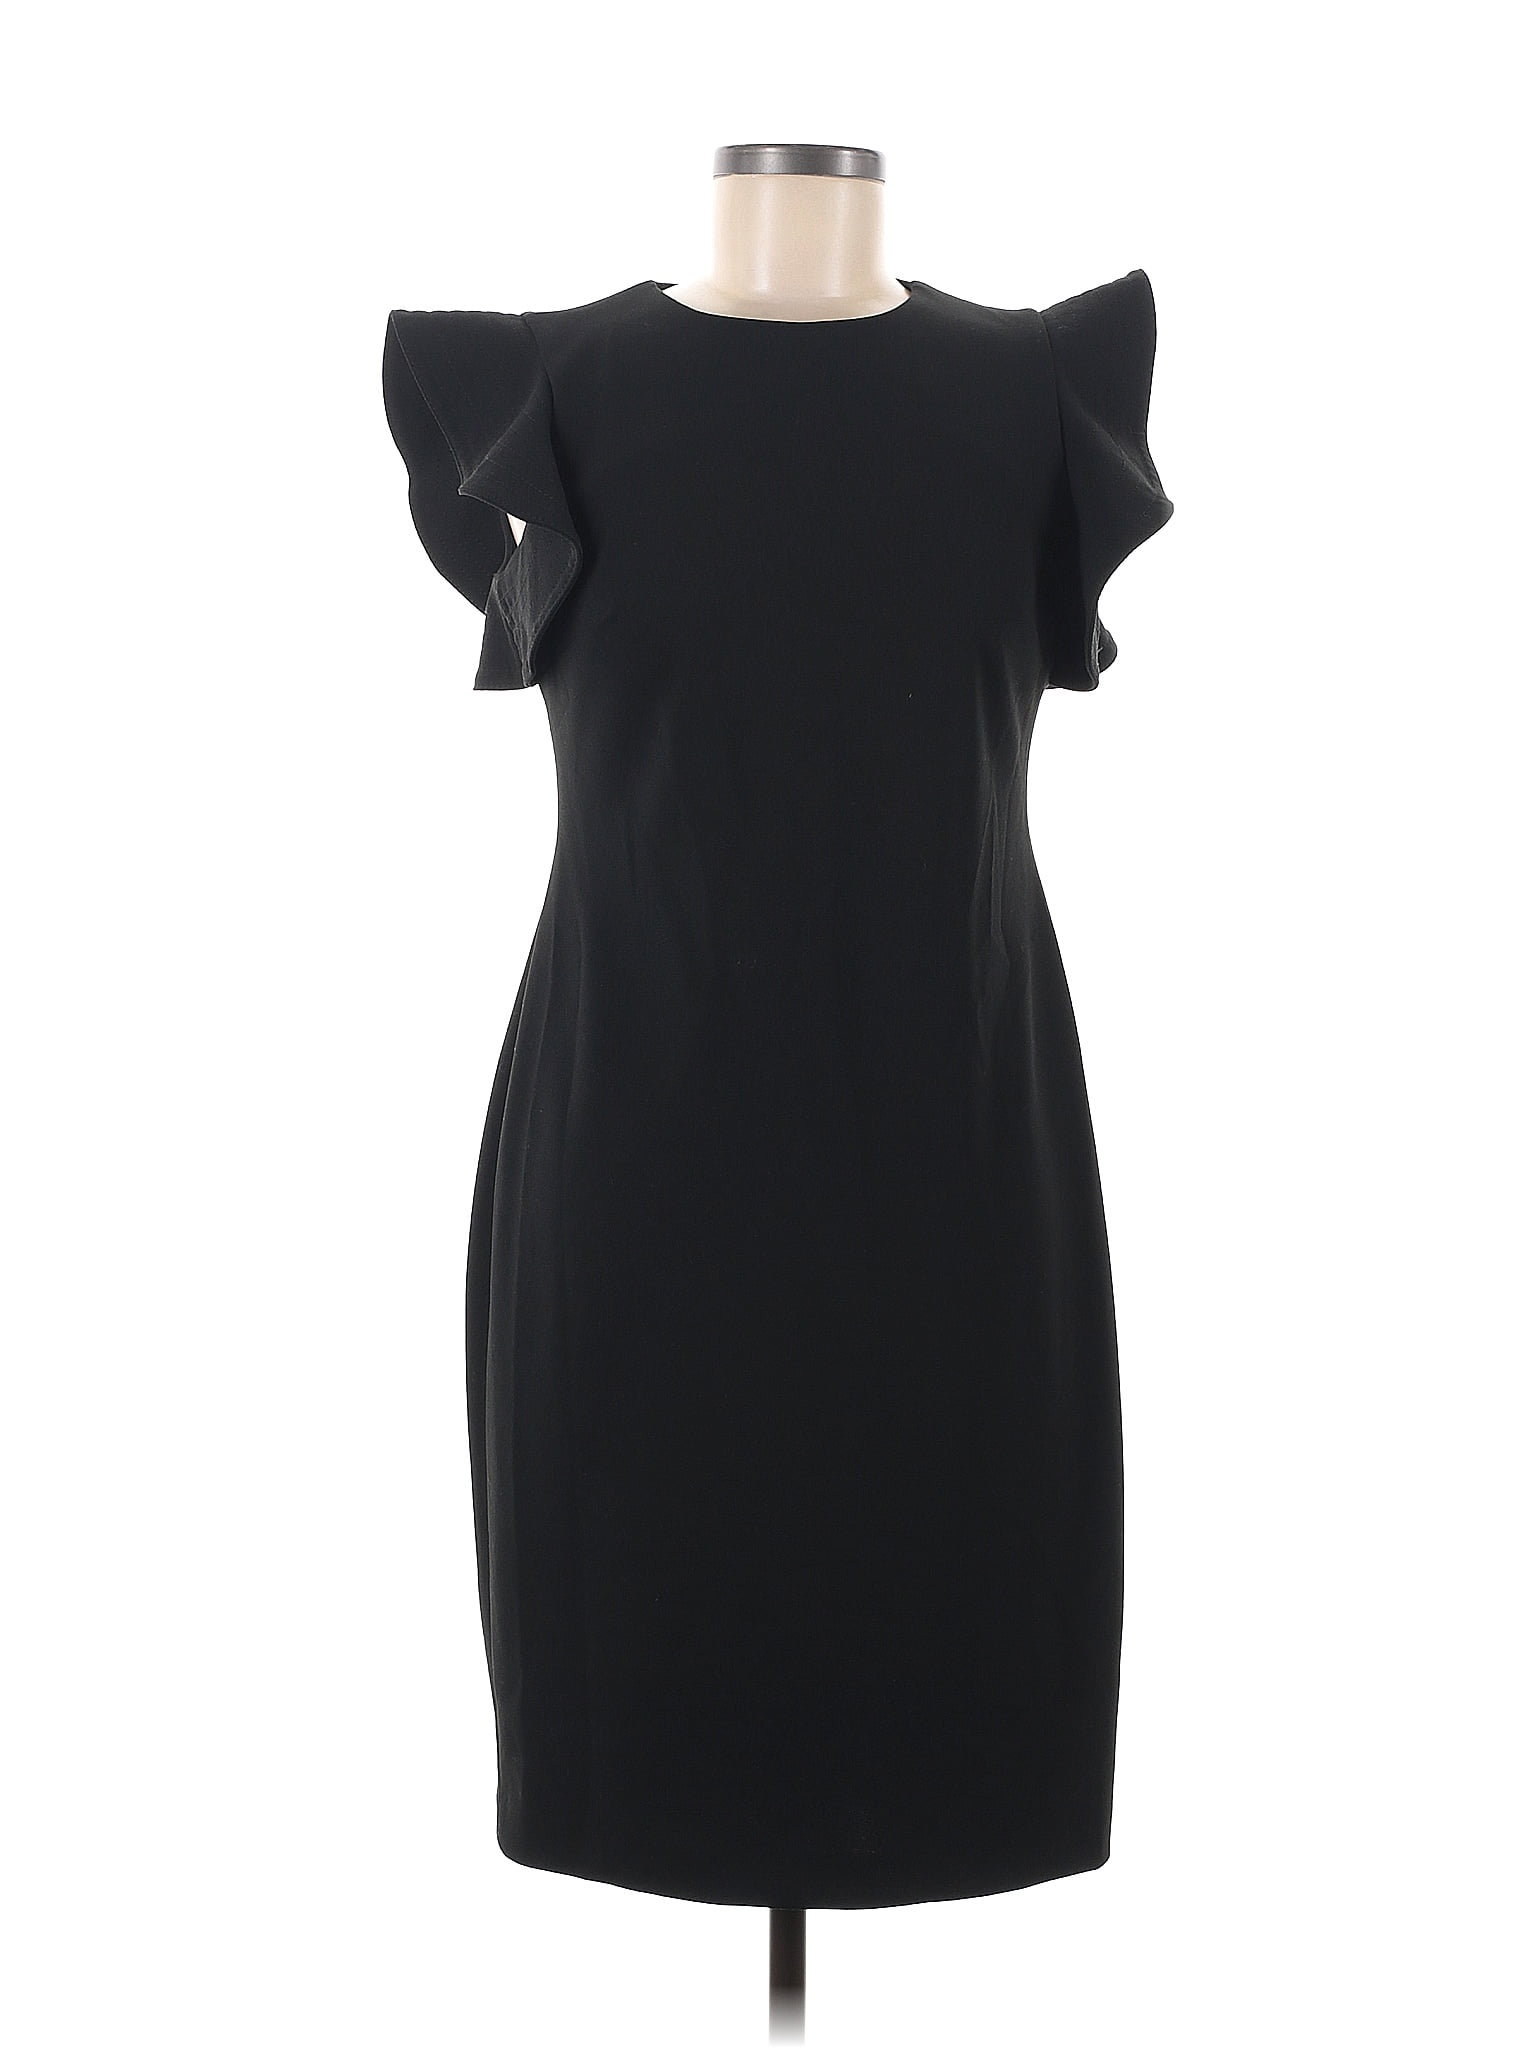 Calvin Klein Black Casual Dress Size 6 - 77% off | thredUP